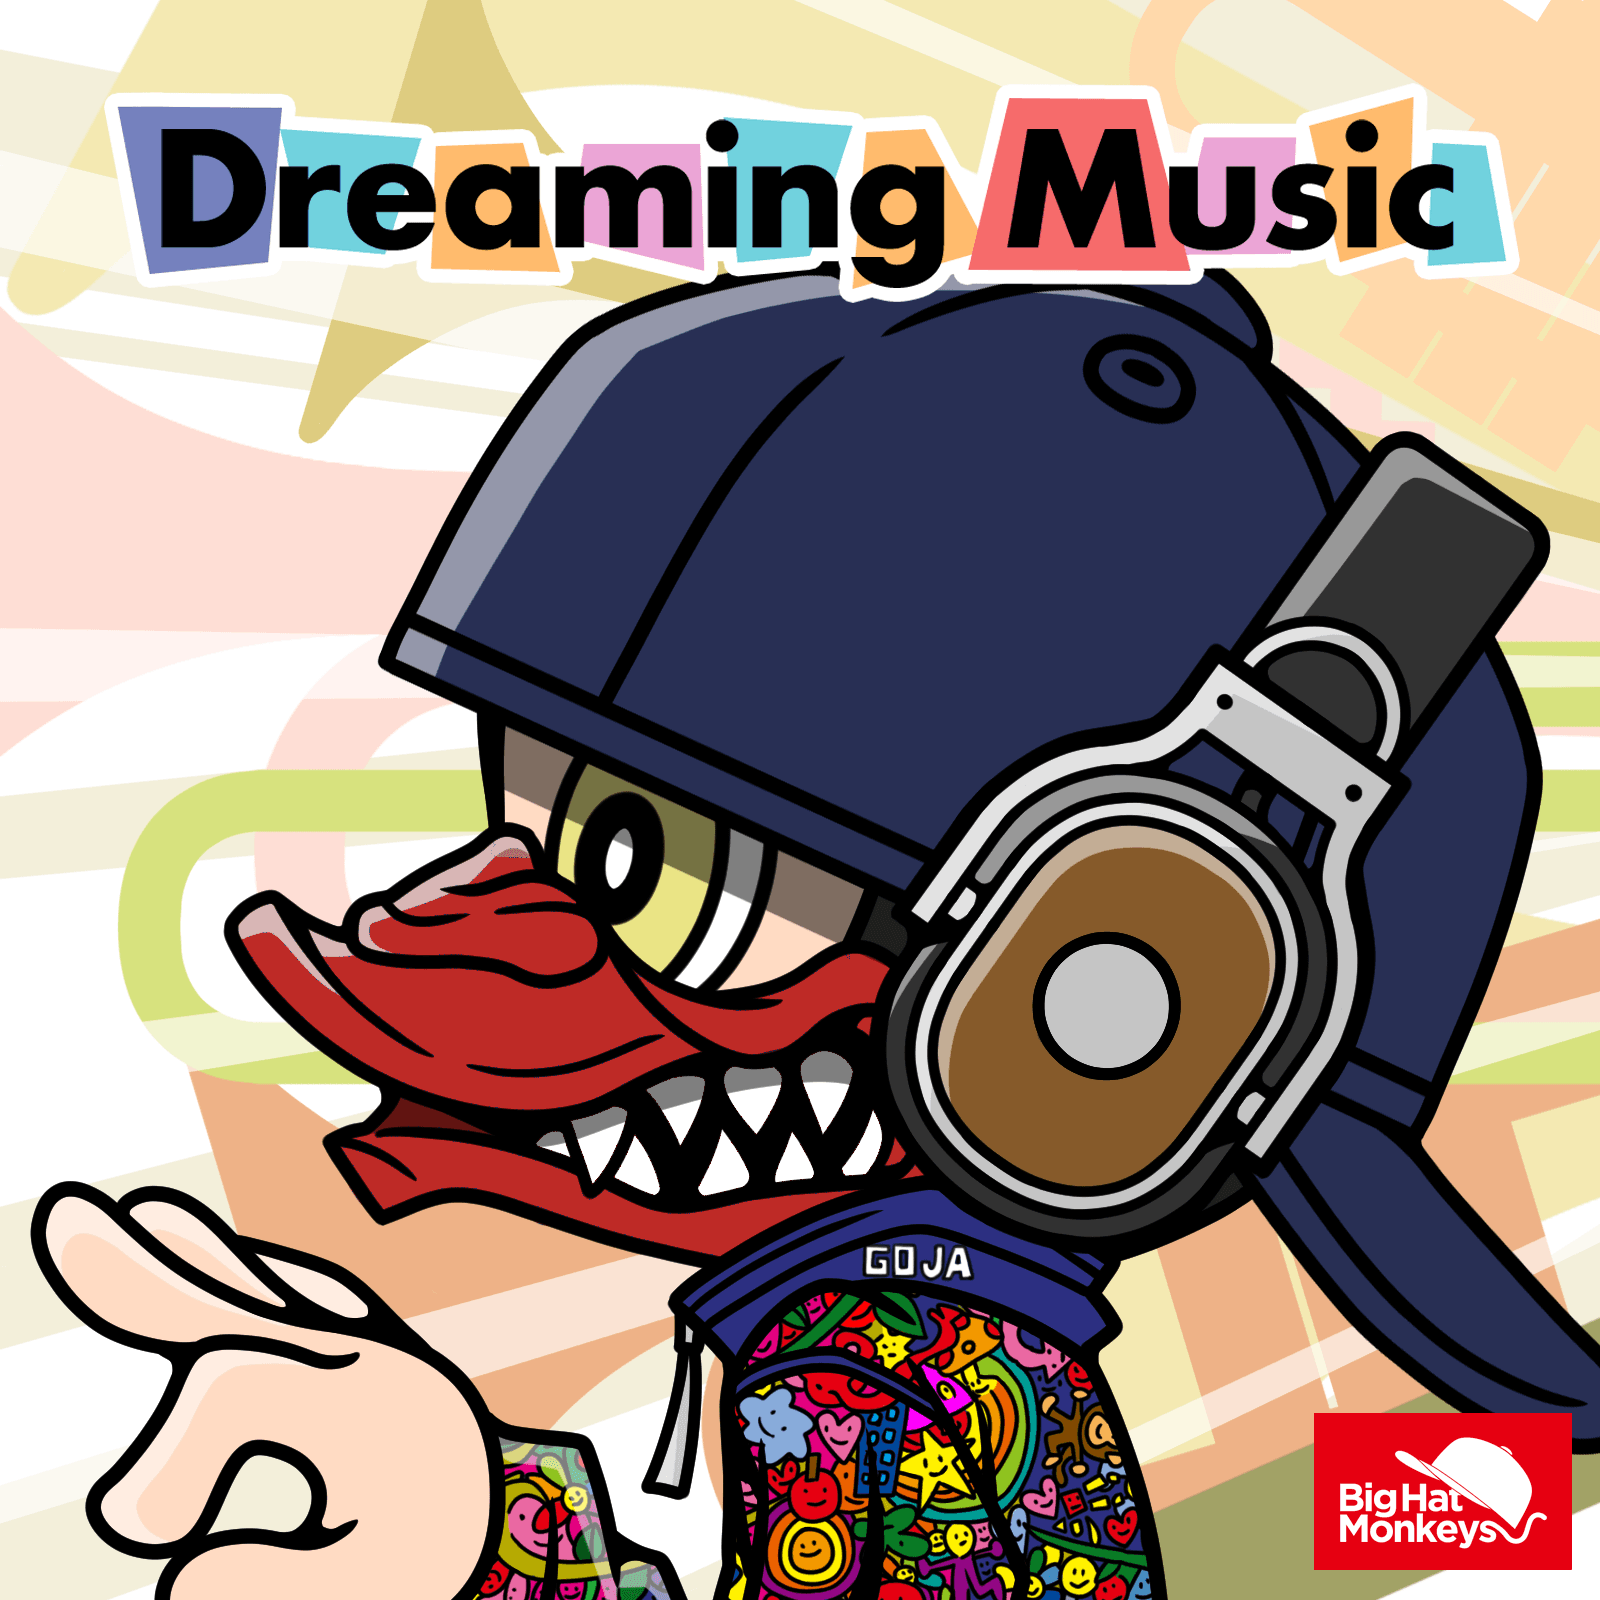 Dreaming Music #0214